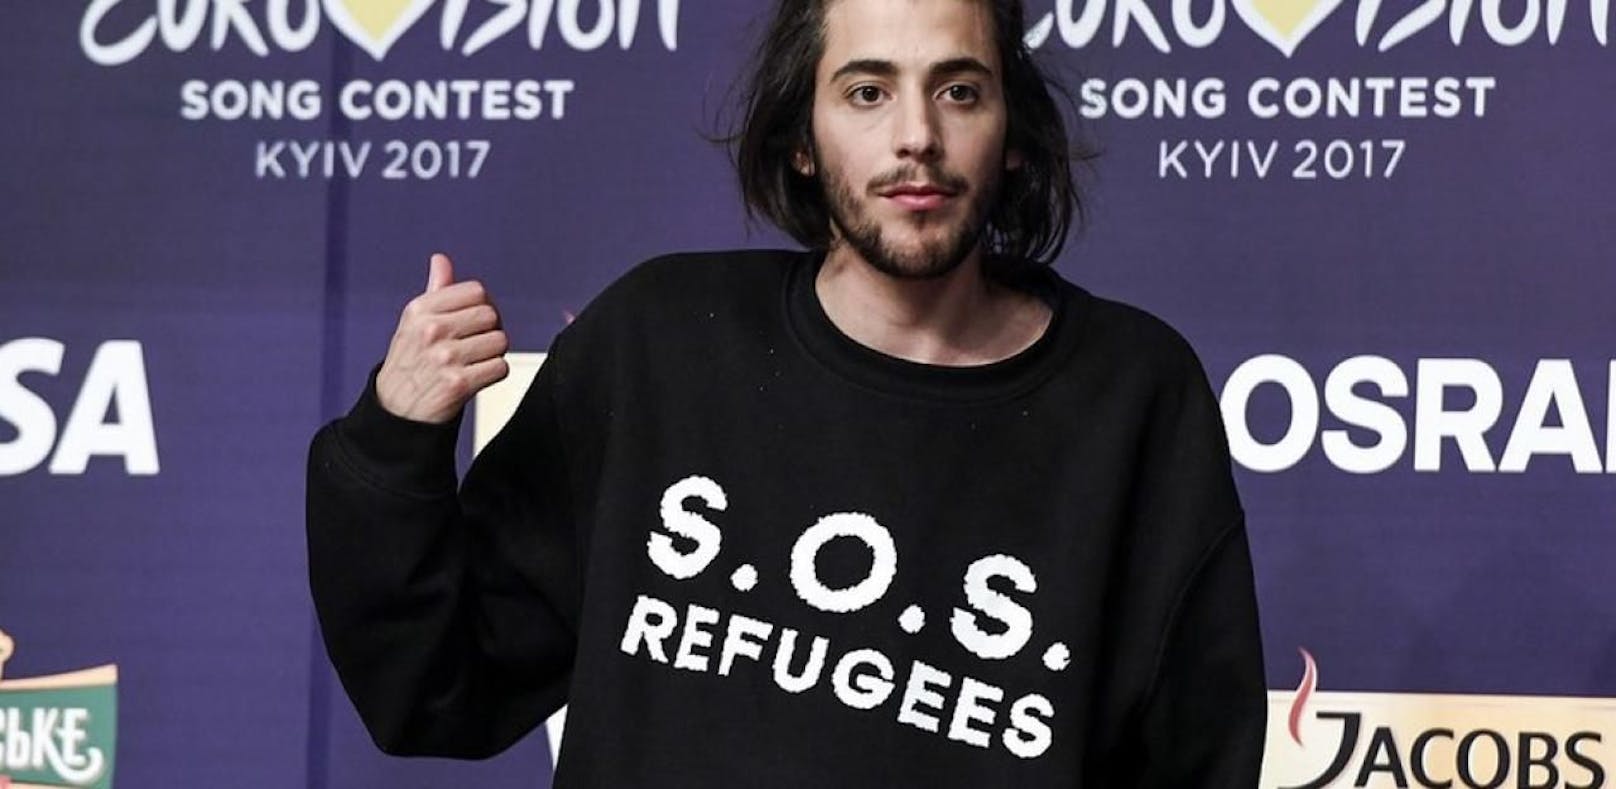 EBU verbat Salvador Sobral "Refugee"-Pullover